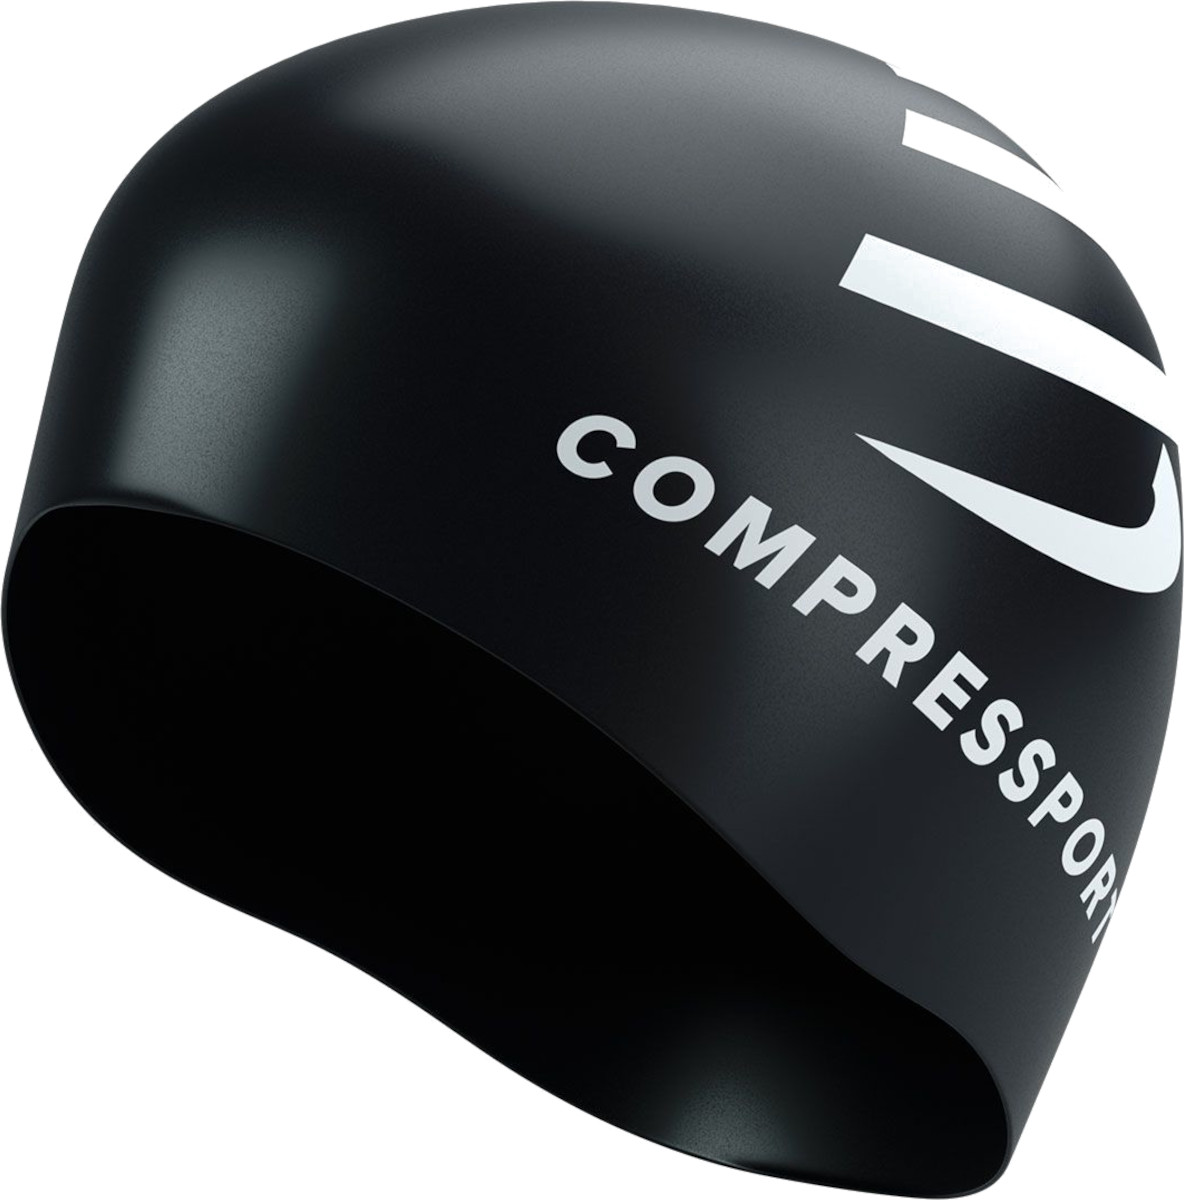 Kape Compressport Swim cap